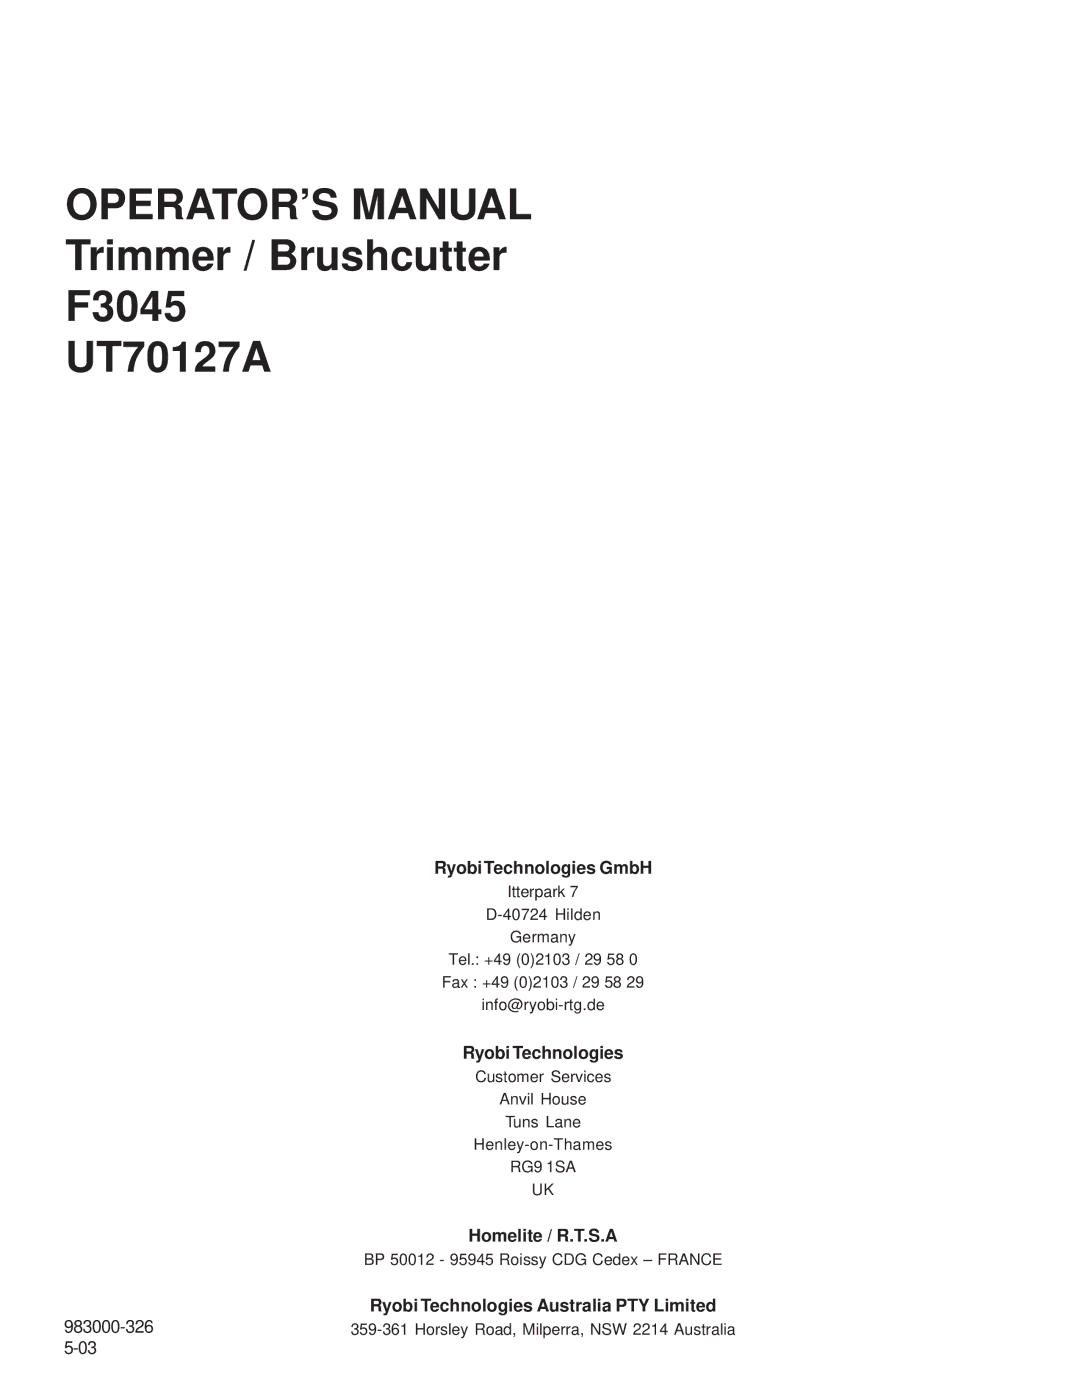 Homelite UT70127A manual RyobiTechnologies GmbH 